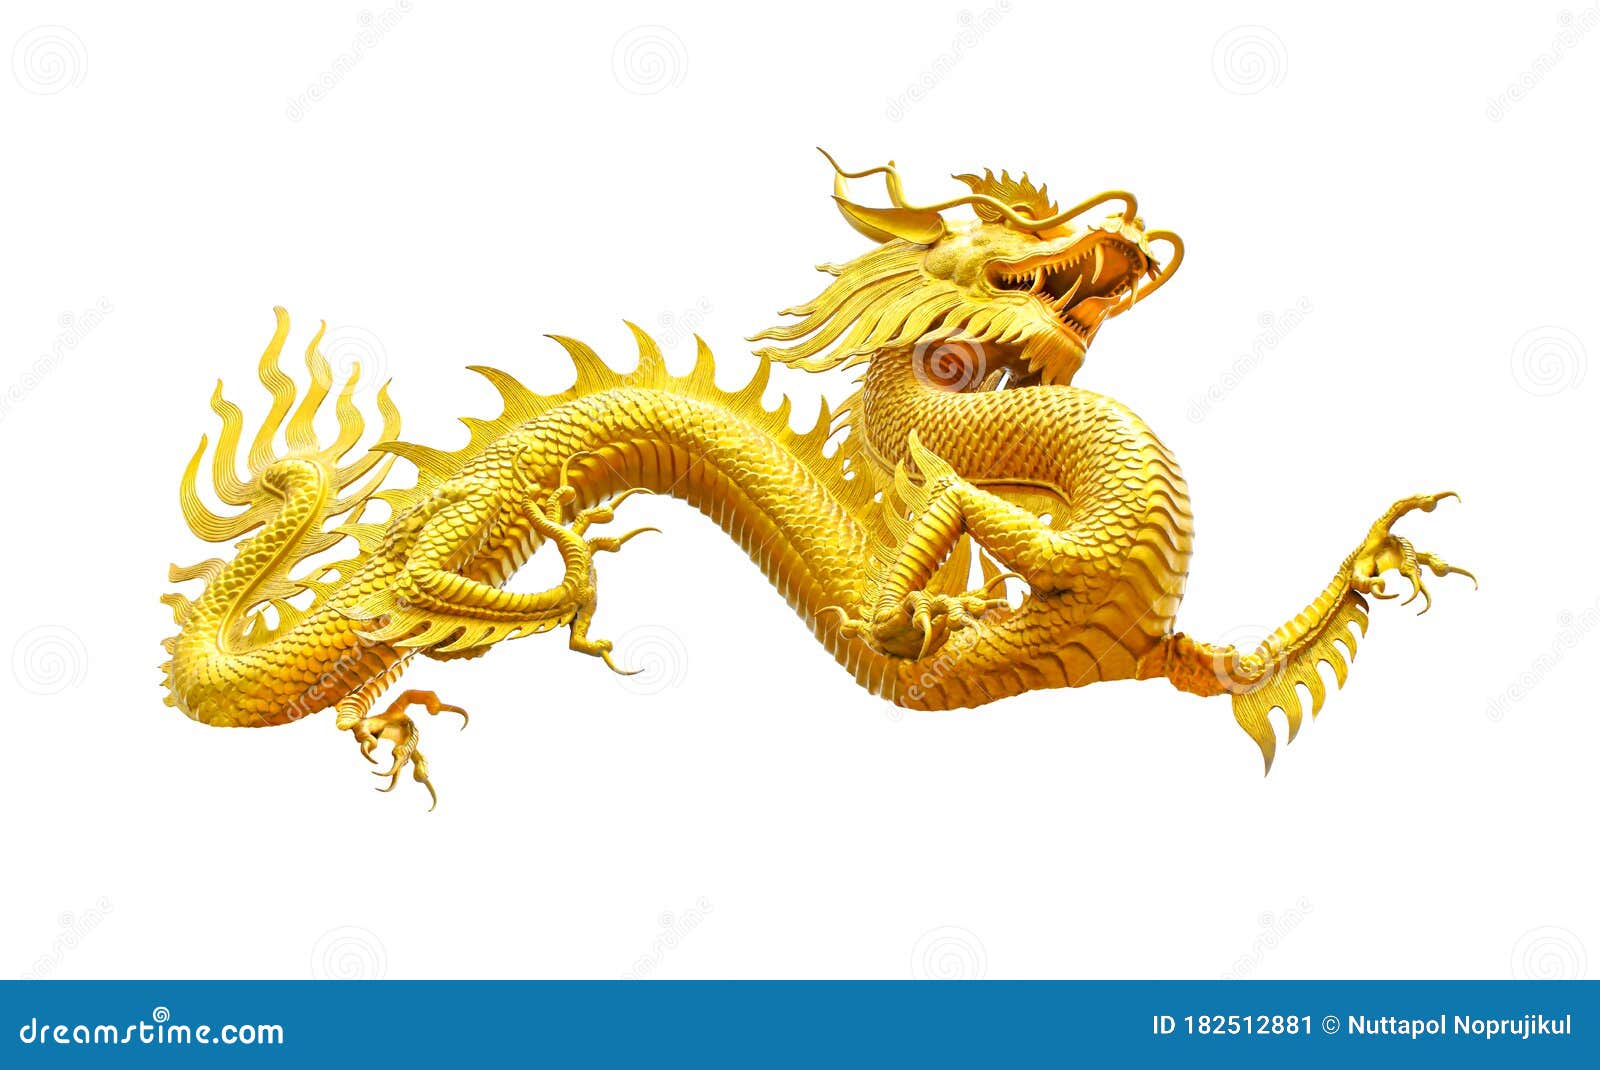 Включи золотой дракон. Золотой китайский дракон. Золотой дракон на белом фоне. Дракон белый золотой дракон белый золотой.